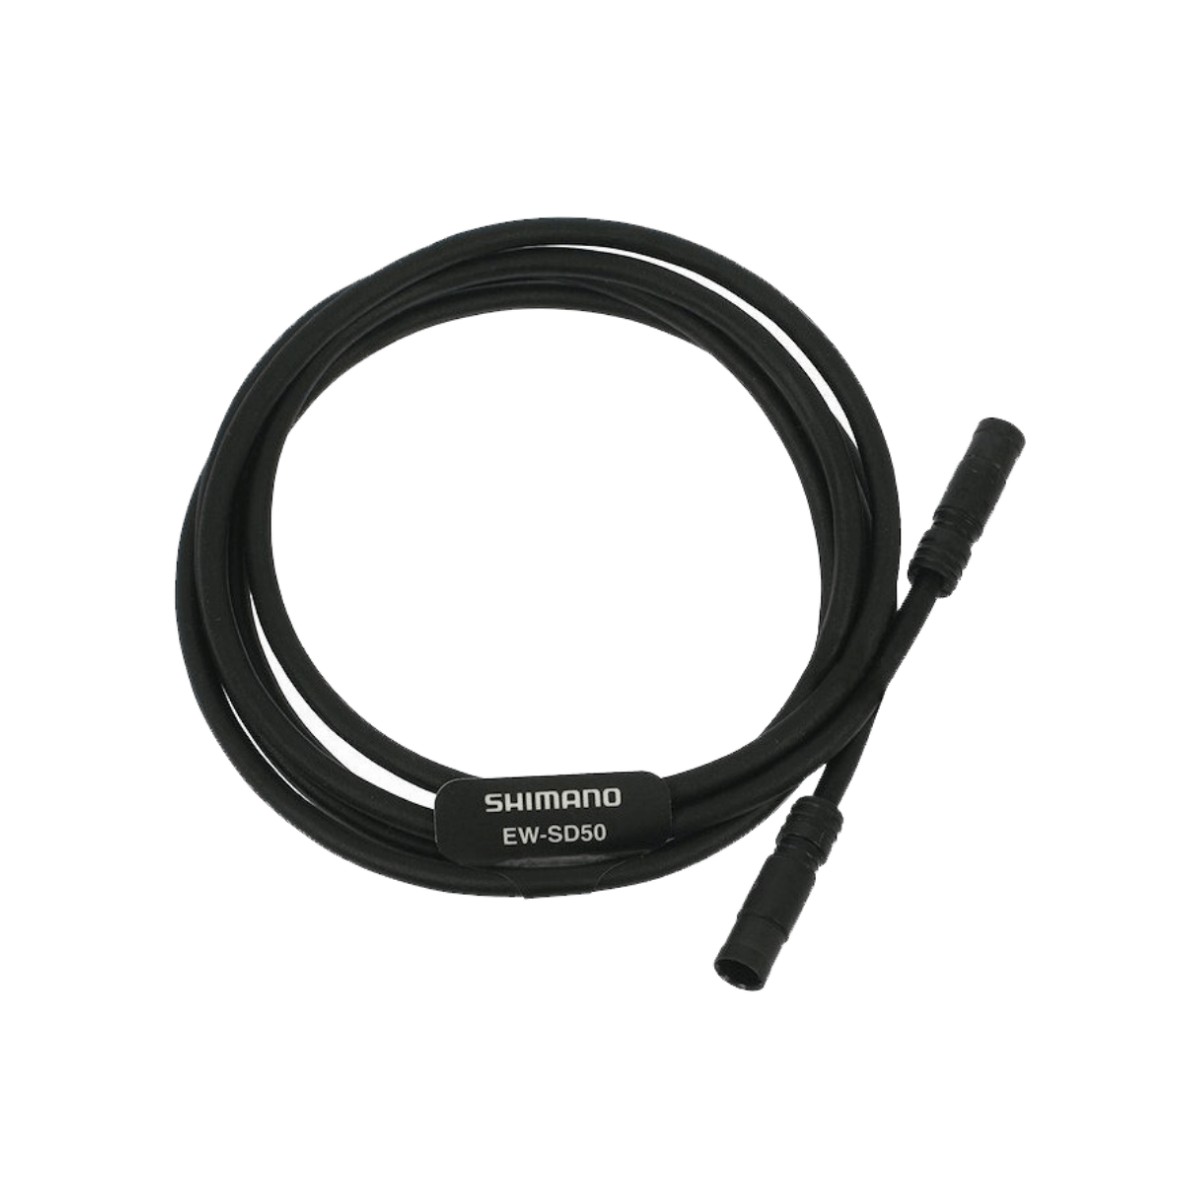 Shimano Di2 EW-SD50 1200mm Power Cable